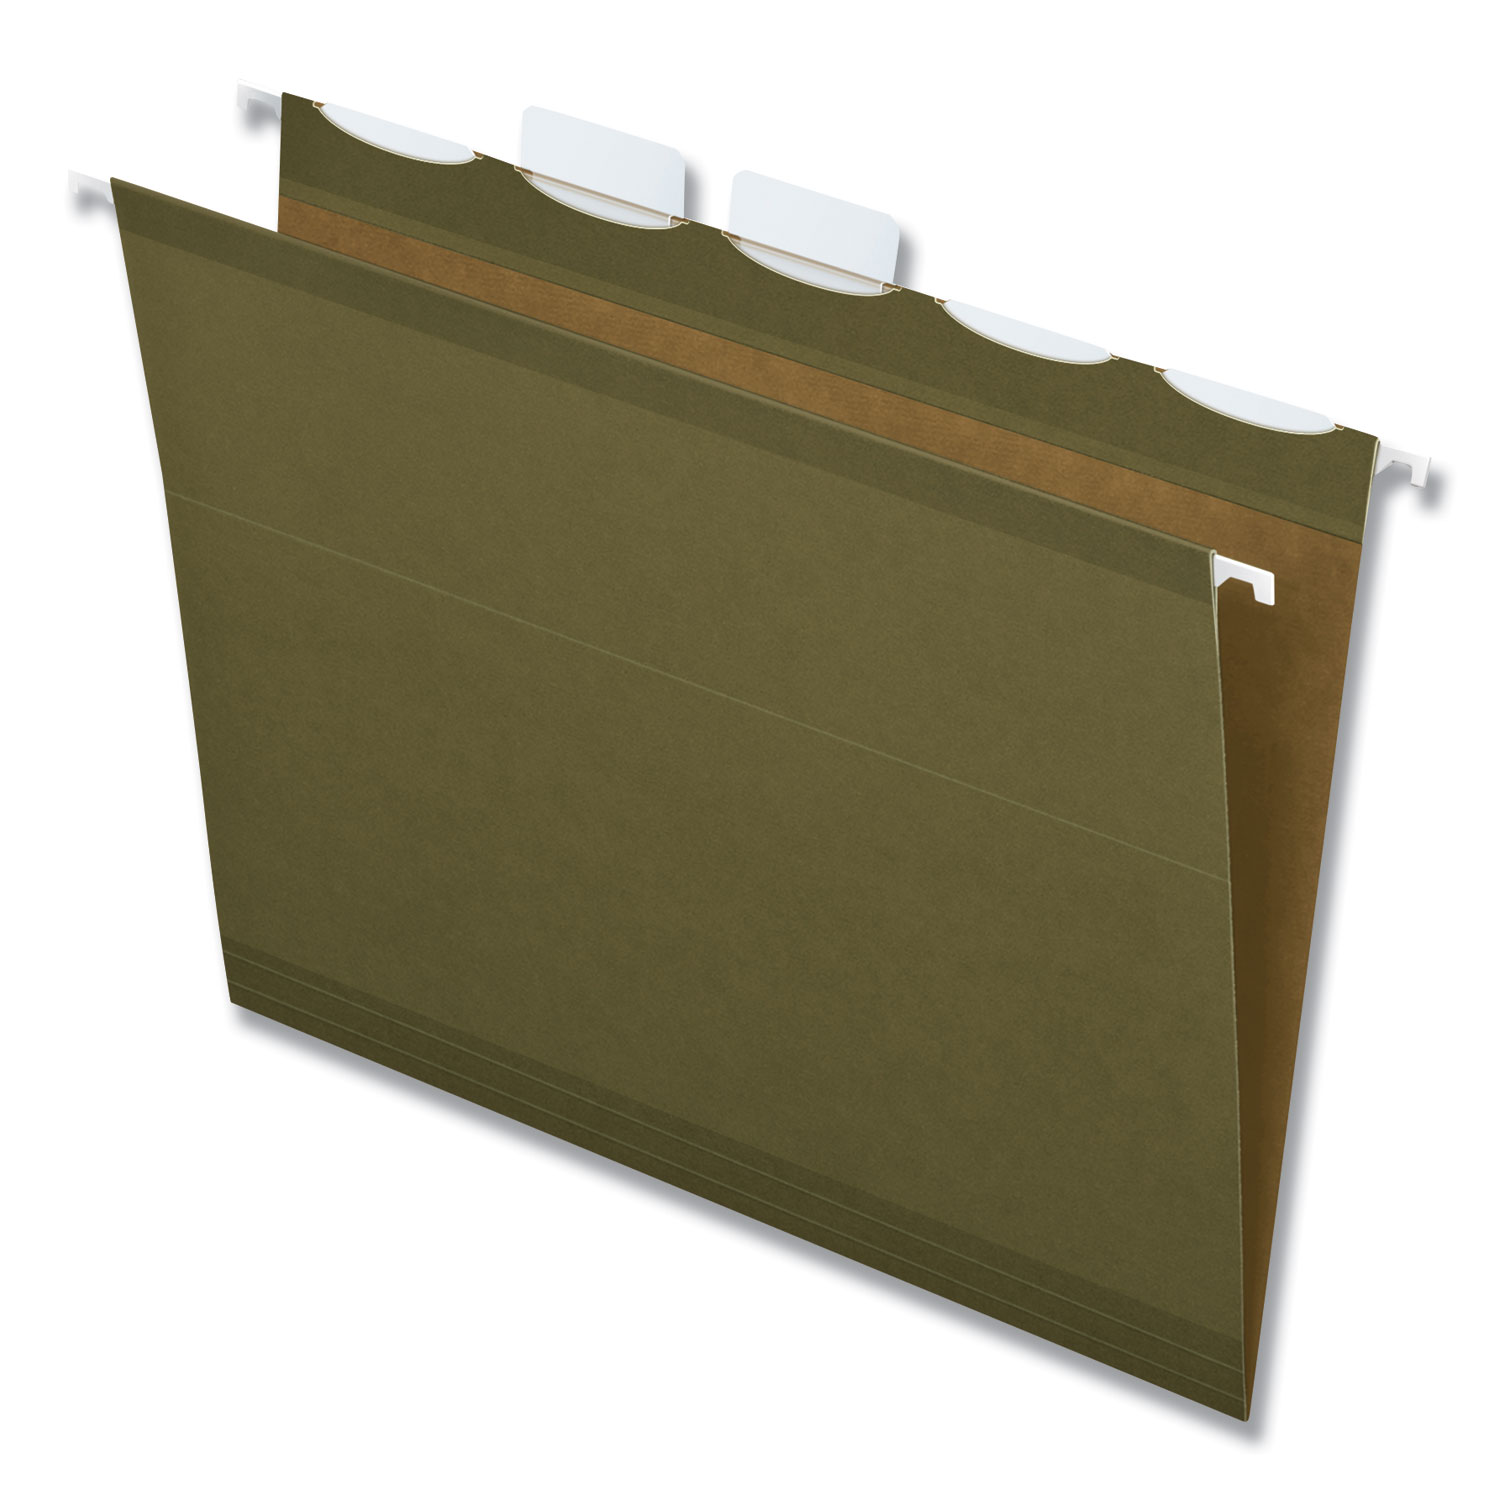  Pendaflex 42590 Ready-Tab Reinforced Hanging File Folders, Letter Size, 1/5-Cut Tab, Standard Green, 25/Box (PFX42590) 